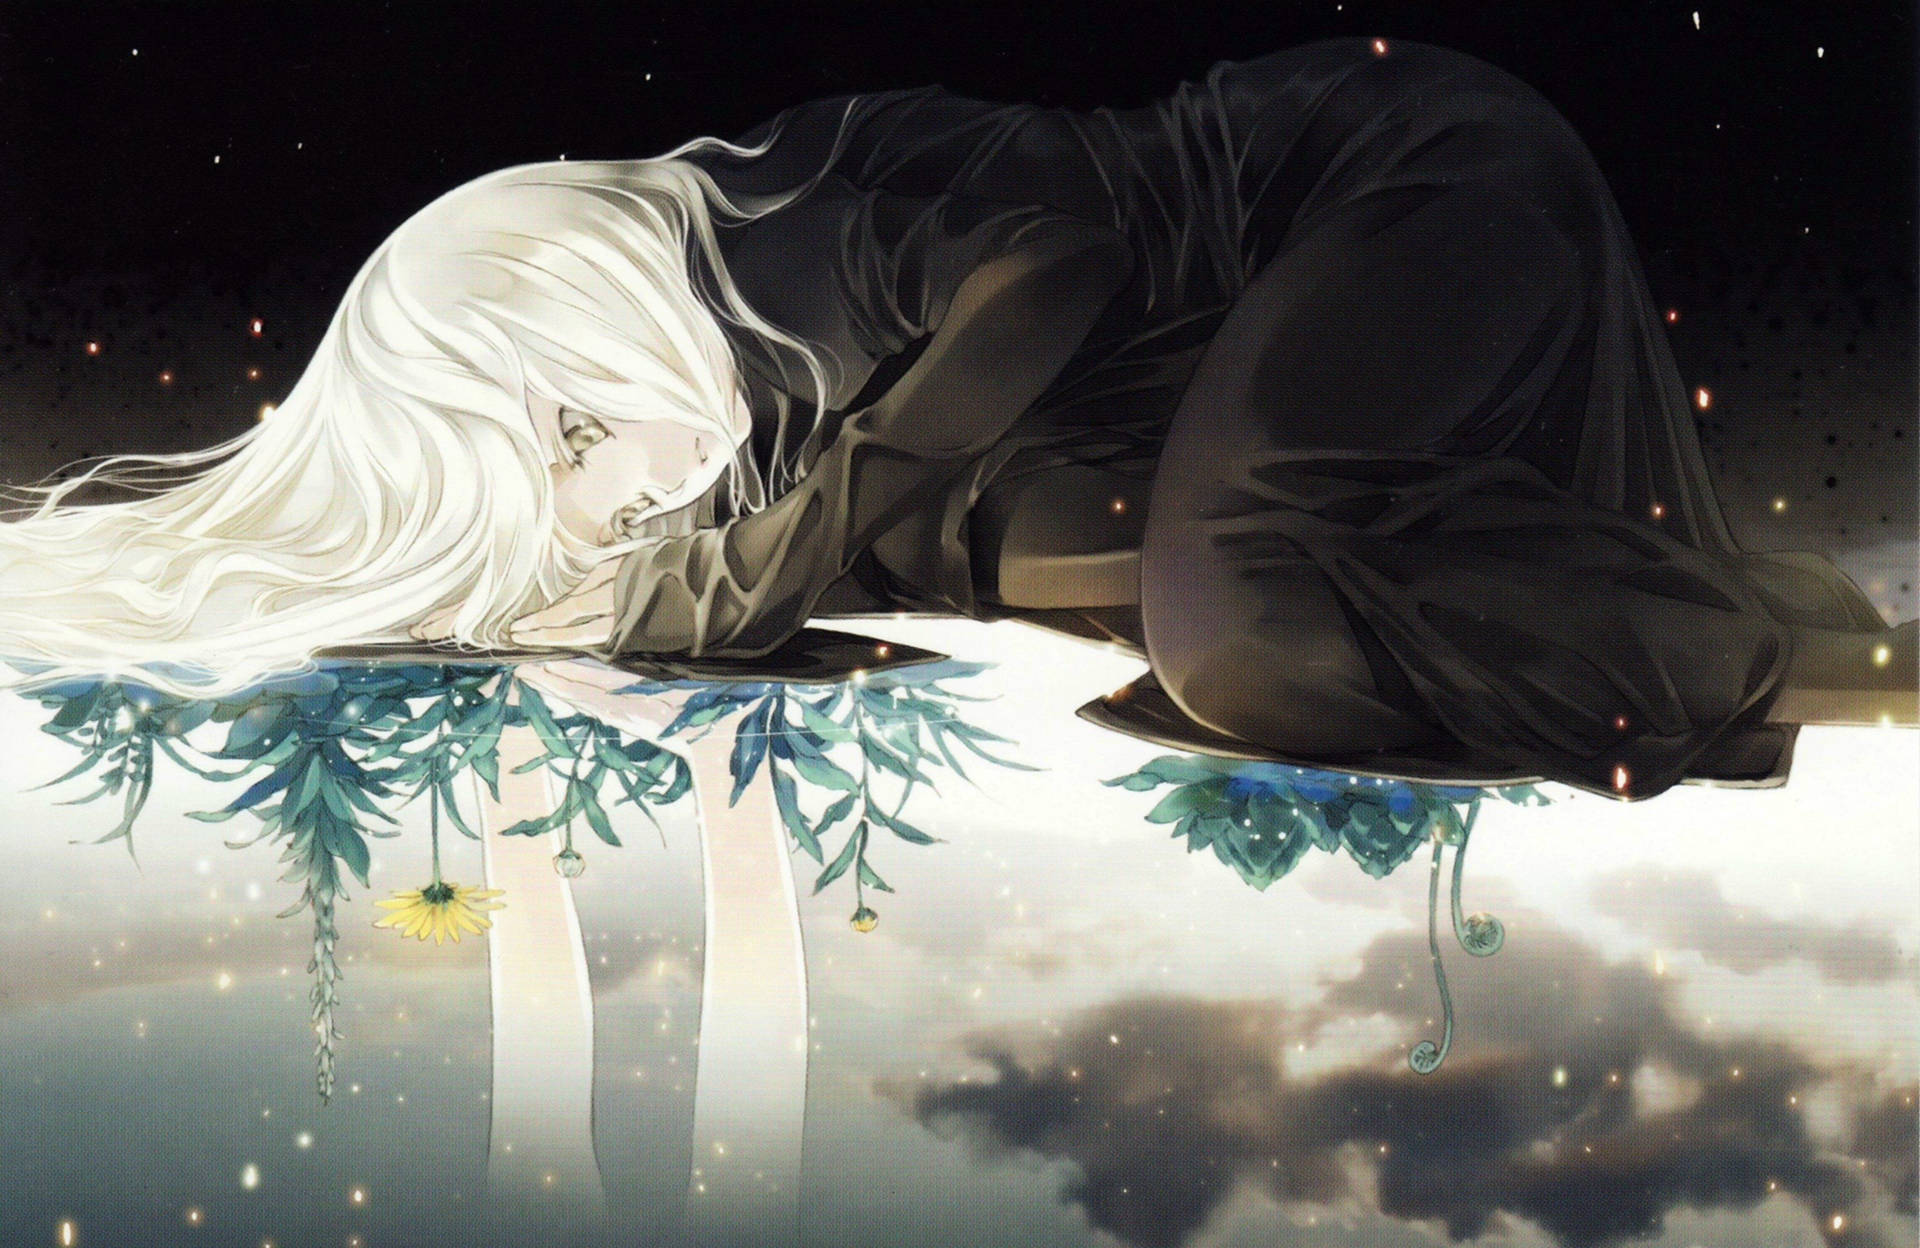 Anime Girl Sad Alone On Reflective Water Background